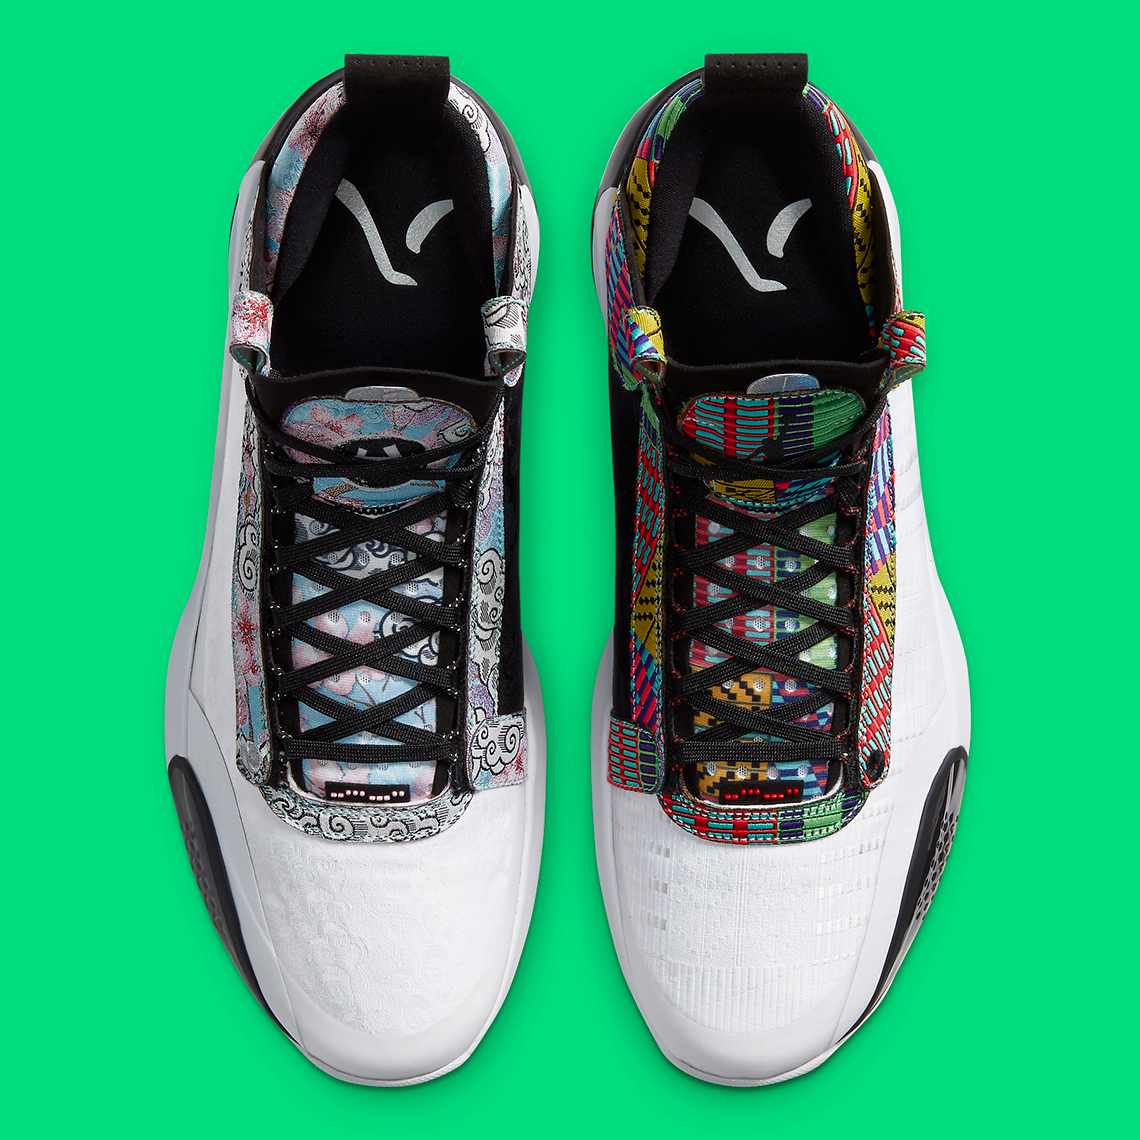 Rui Hachimura Sneaker Tees to Match the Air Jordan 10 Seattle Pe Da1900 900 3